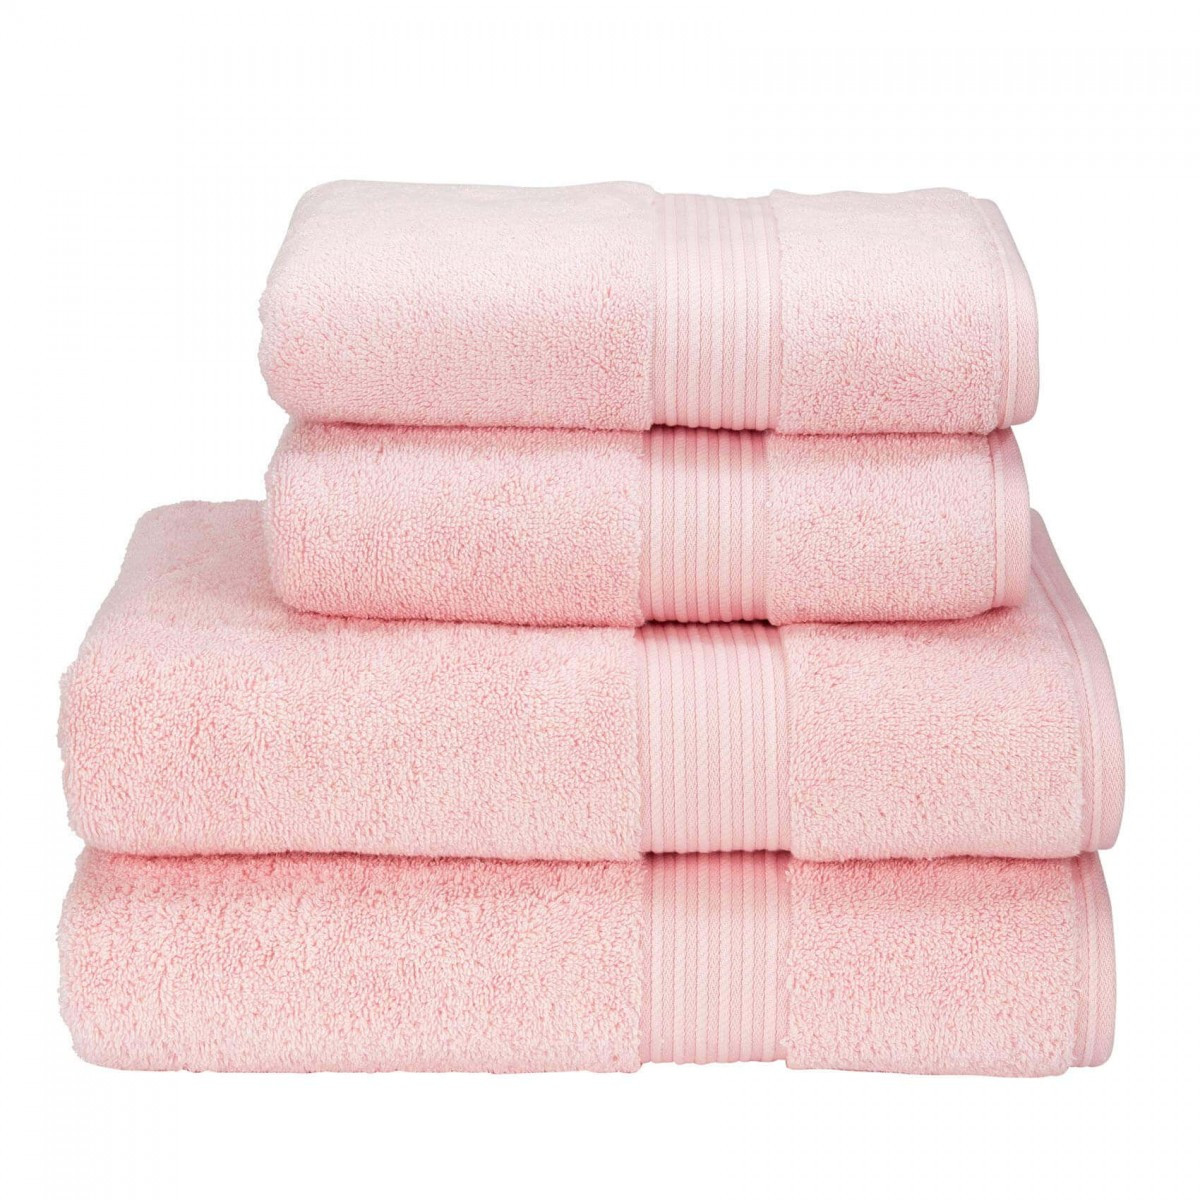 Light Pink Bathroom Towels
 Christy Supreme Hygro Pink Face Cloth Guest Hand Bath